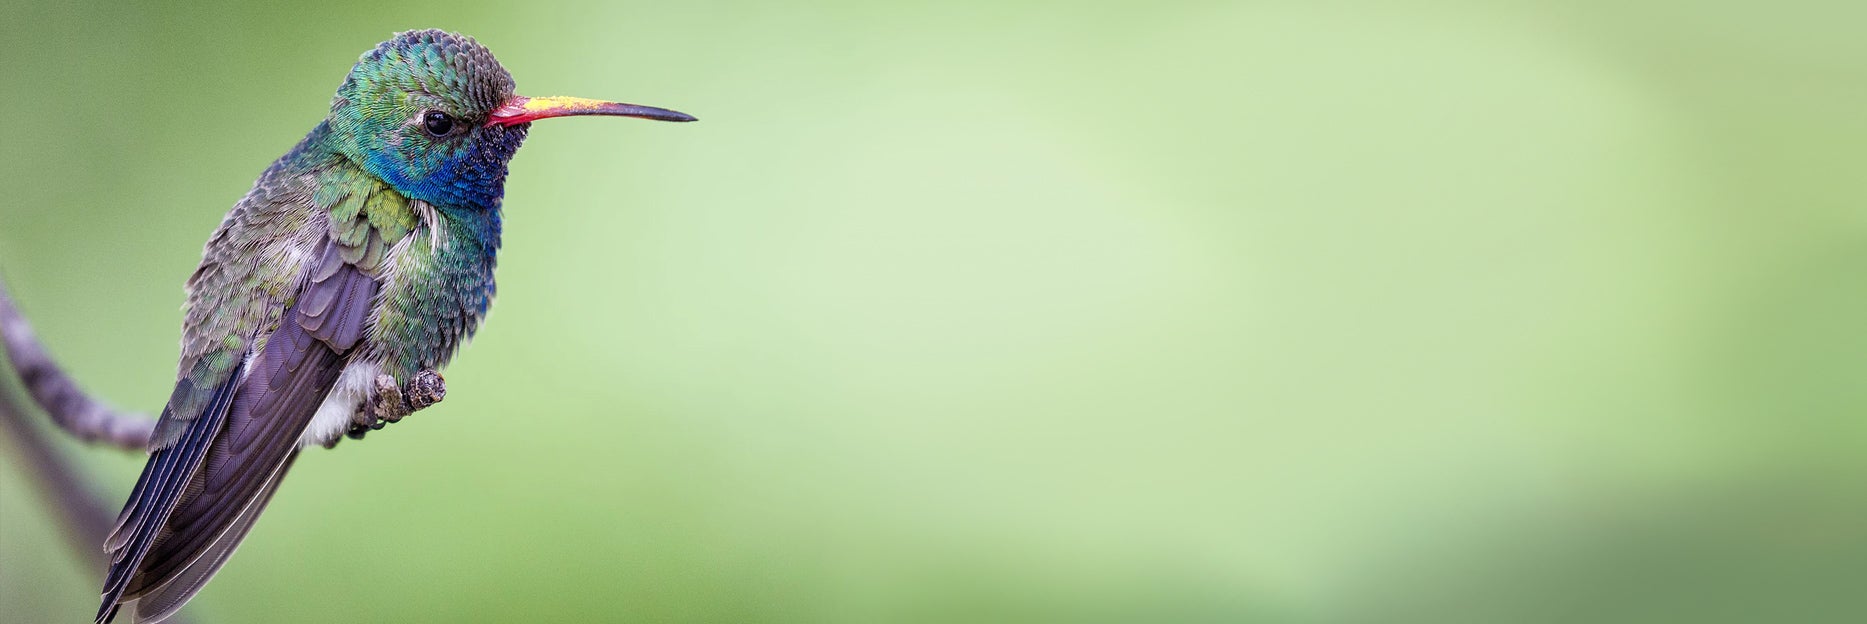 Unslpash- Hummingbird